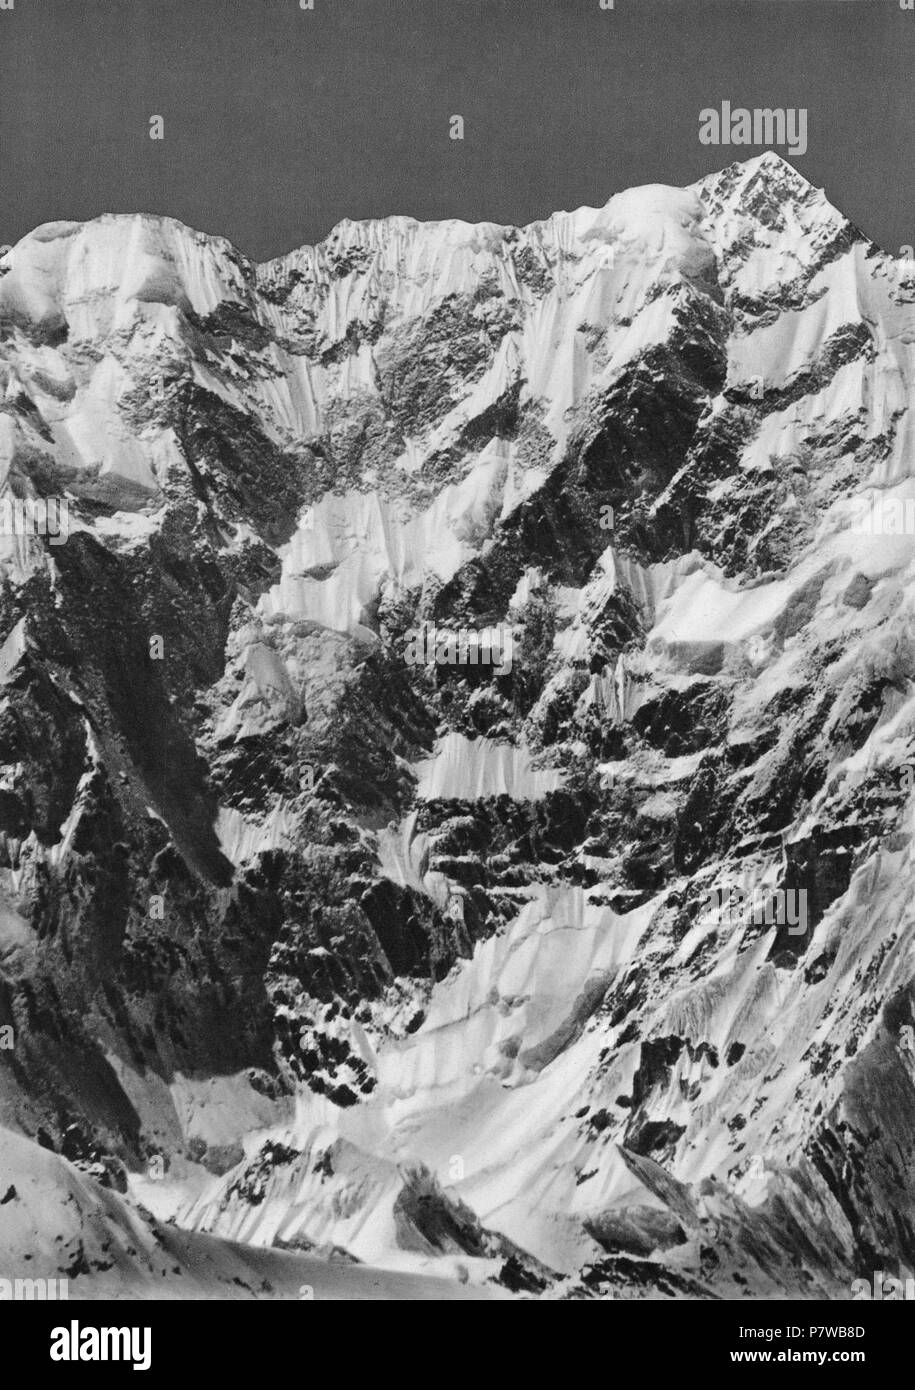 37 plancheXXXVII. Le Kangchenjunga (8603 m), Vu du Glacier de Zemu; Foto de Vittorio Sella Stockfoto